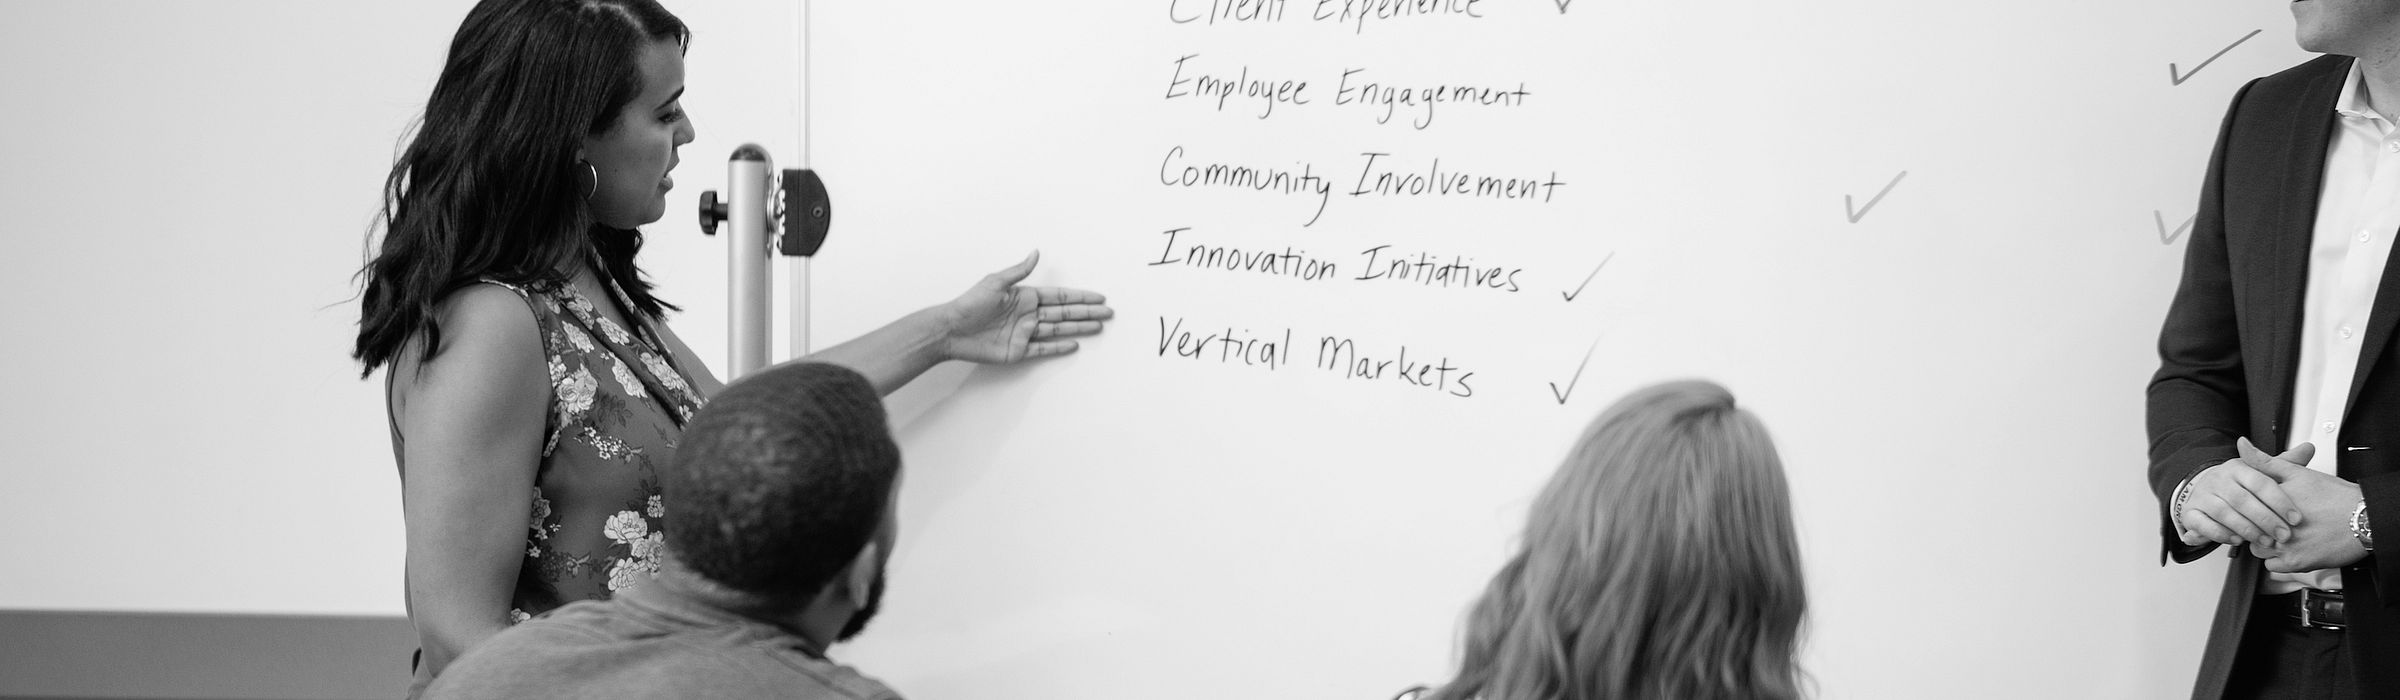 Ideal Service Provider presenting ideas on a white board.